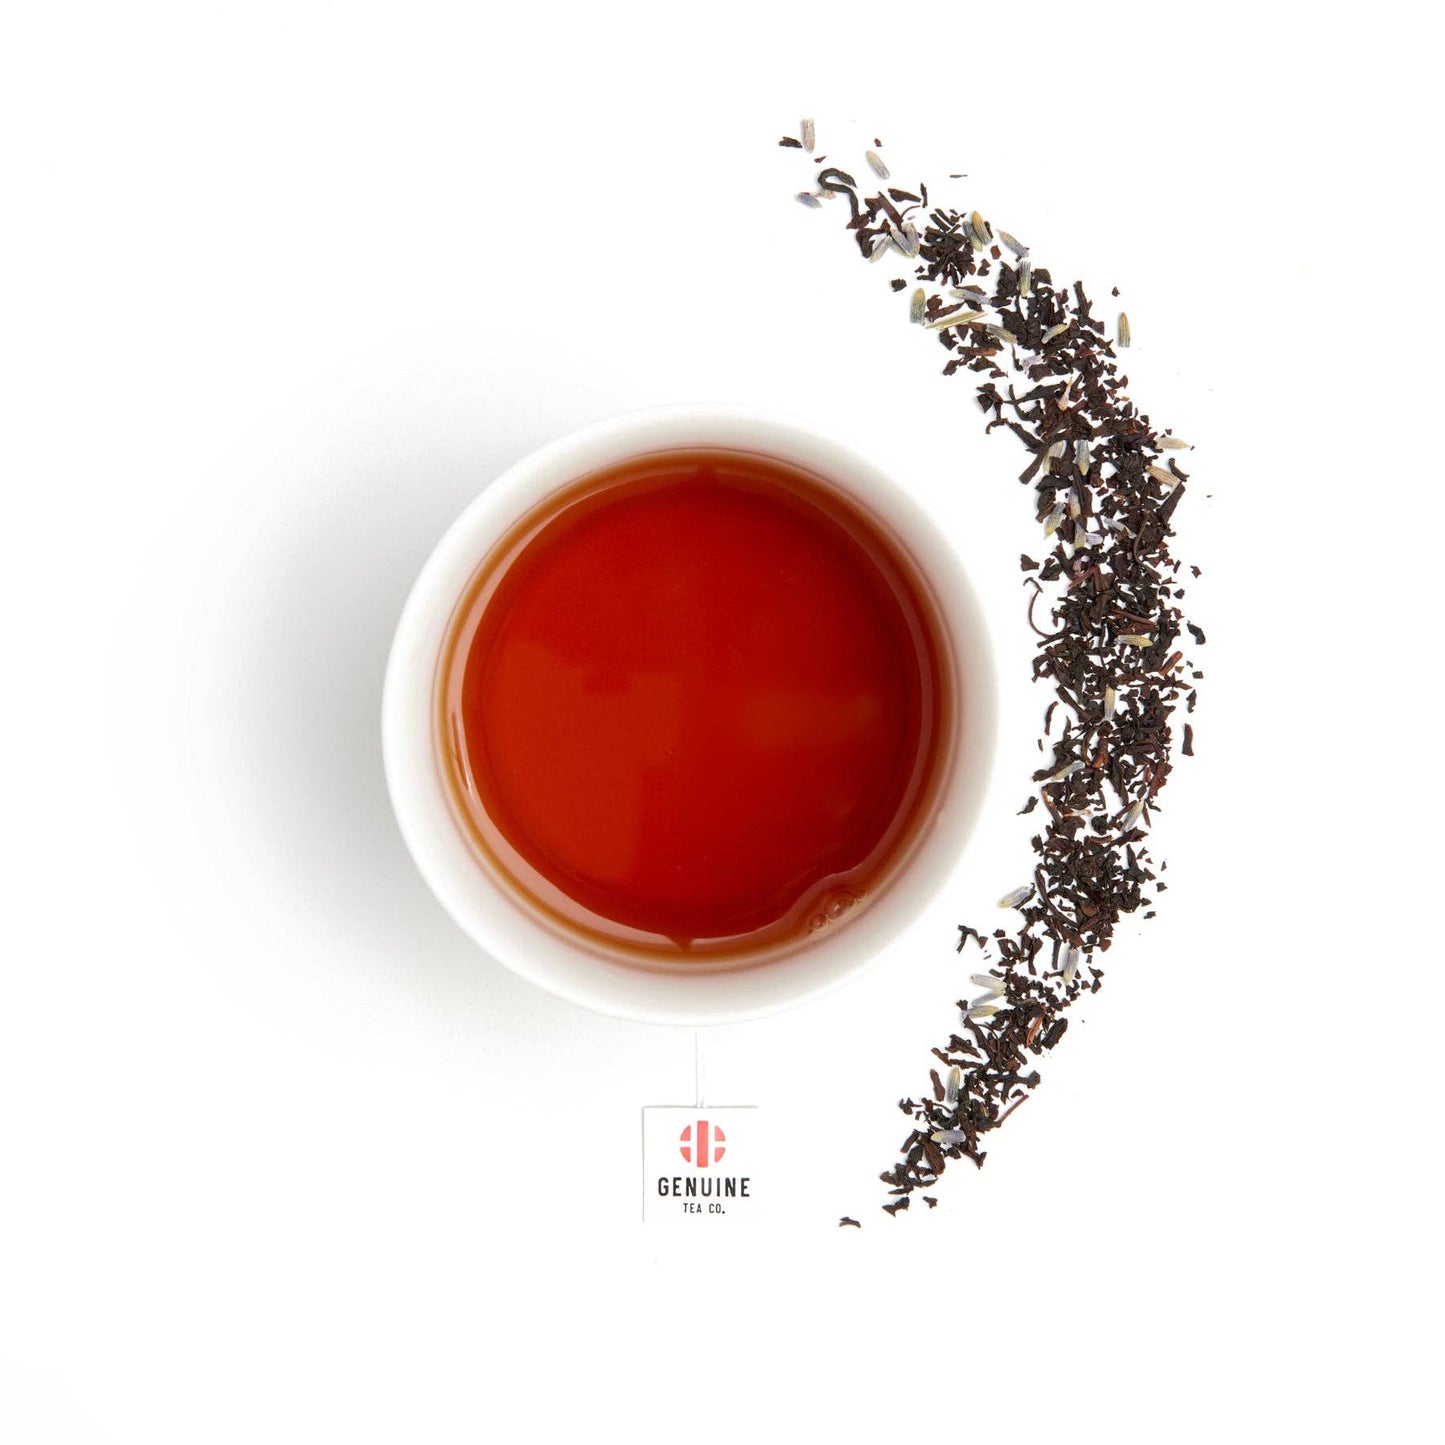 Genuine Tea - Organic Lavender Earl Grey - Black Tea